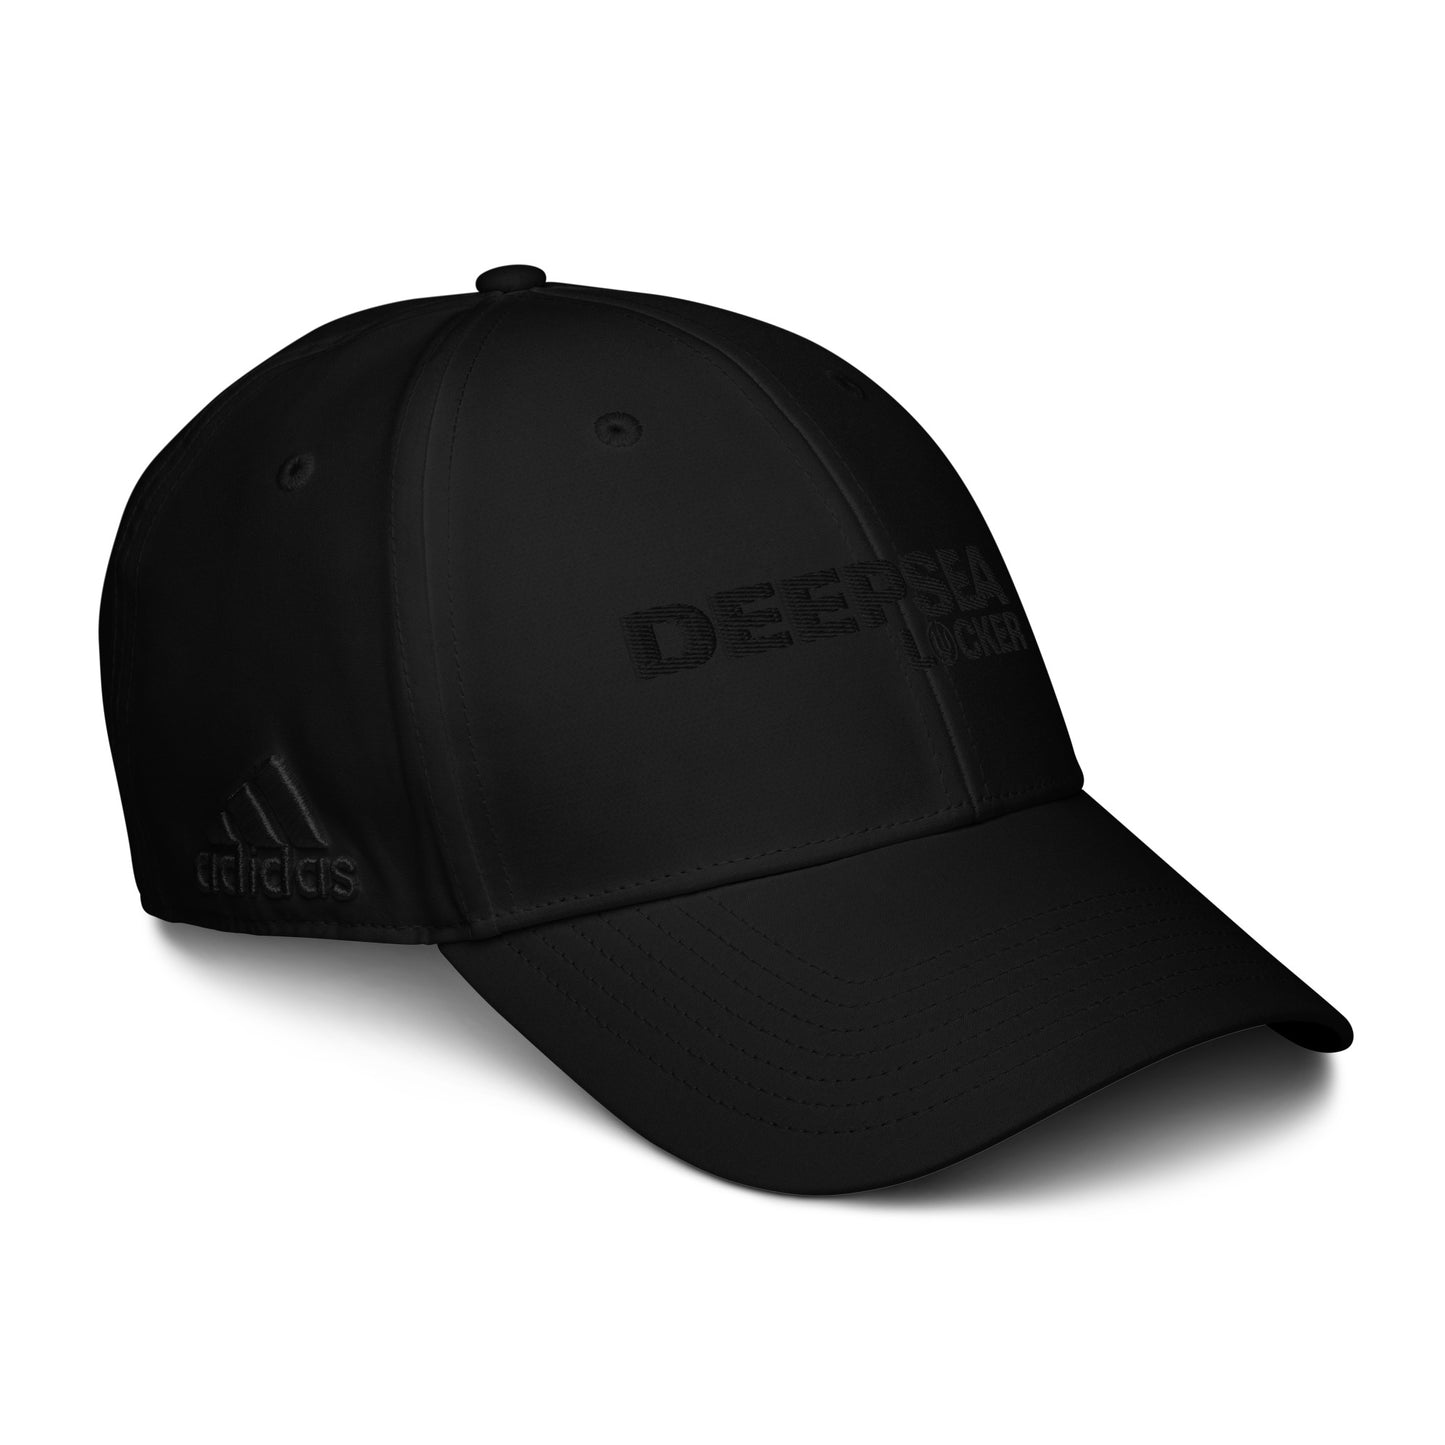 DEEPSEA Locker Black Out / adidas dad hat